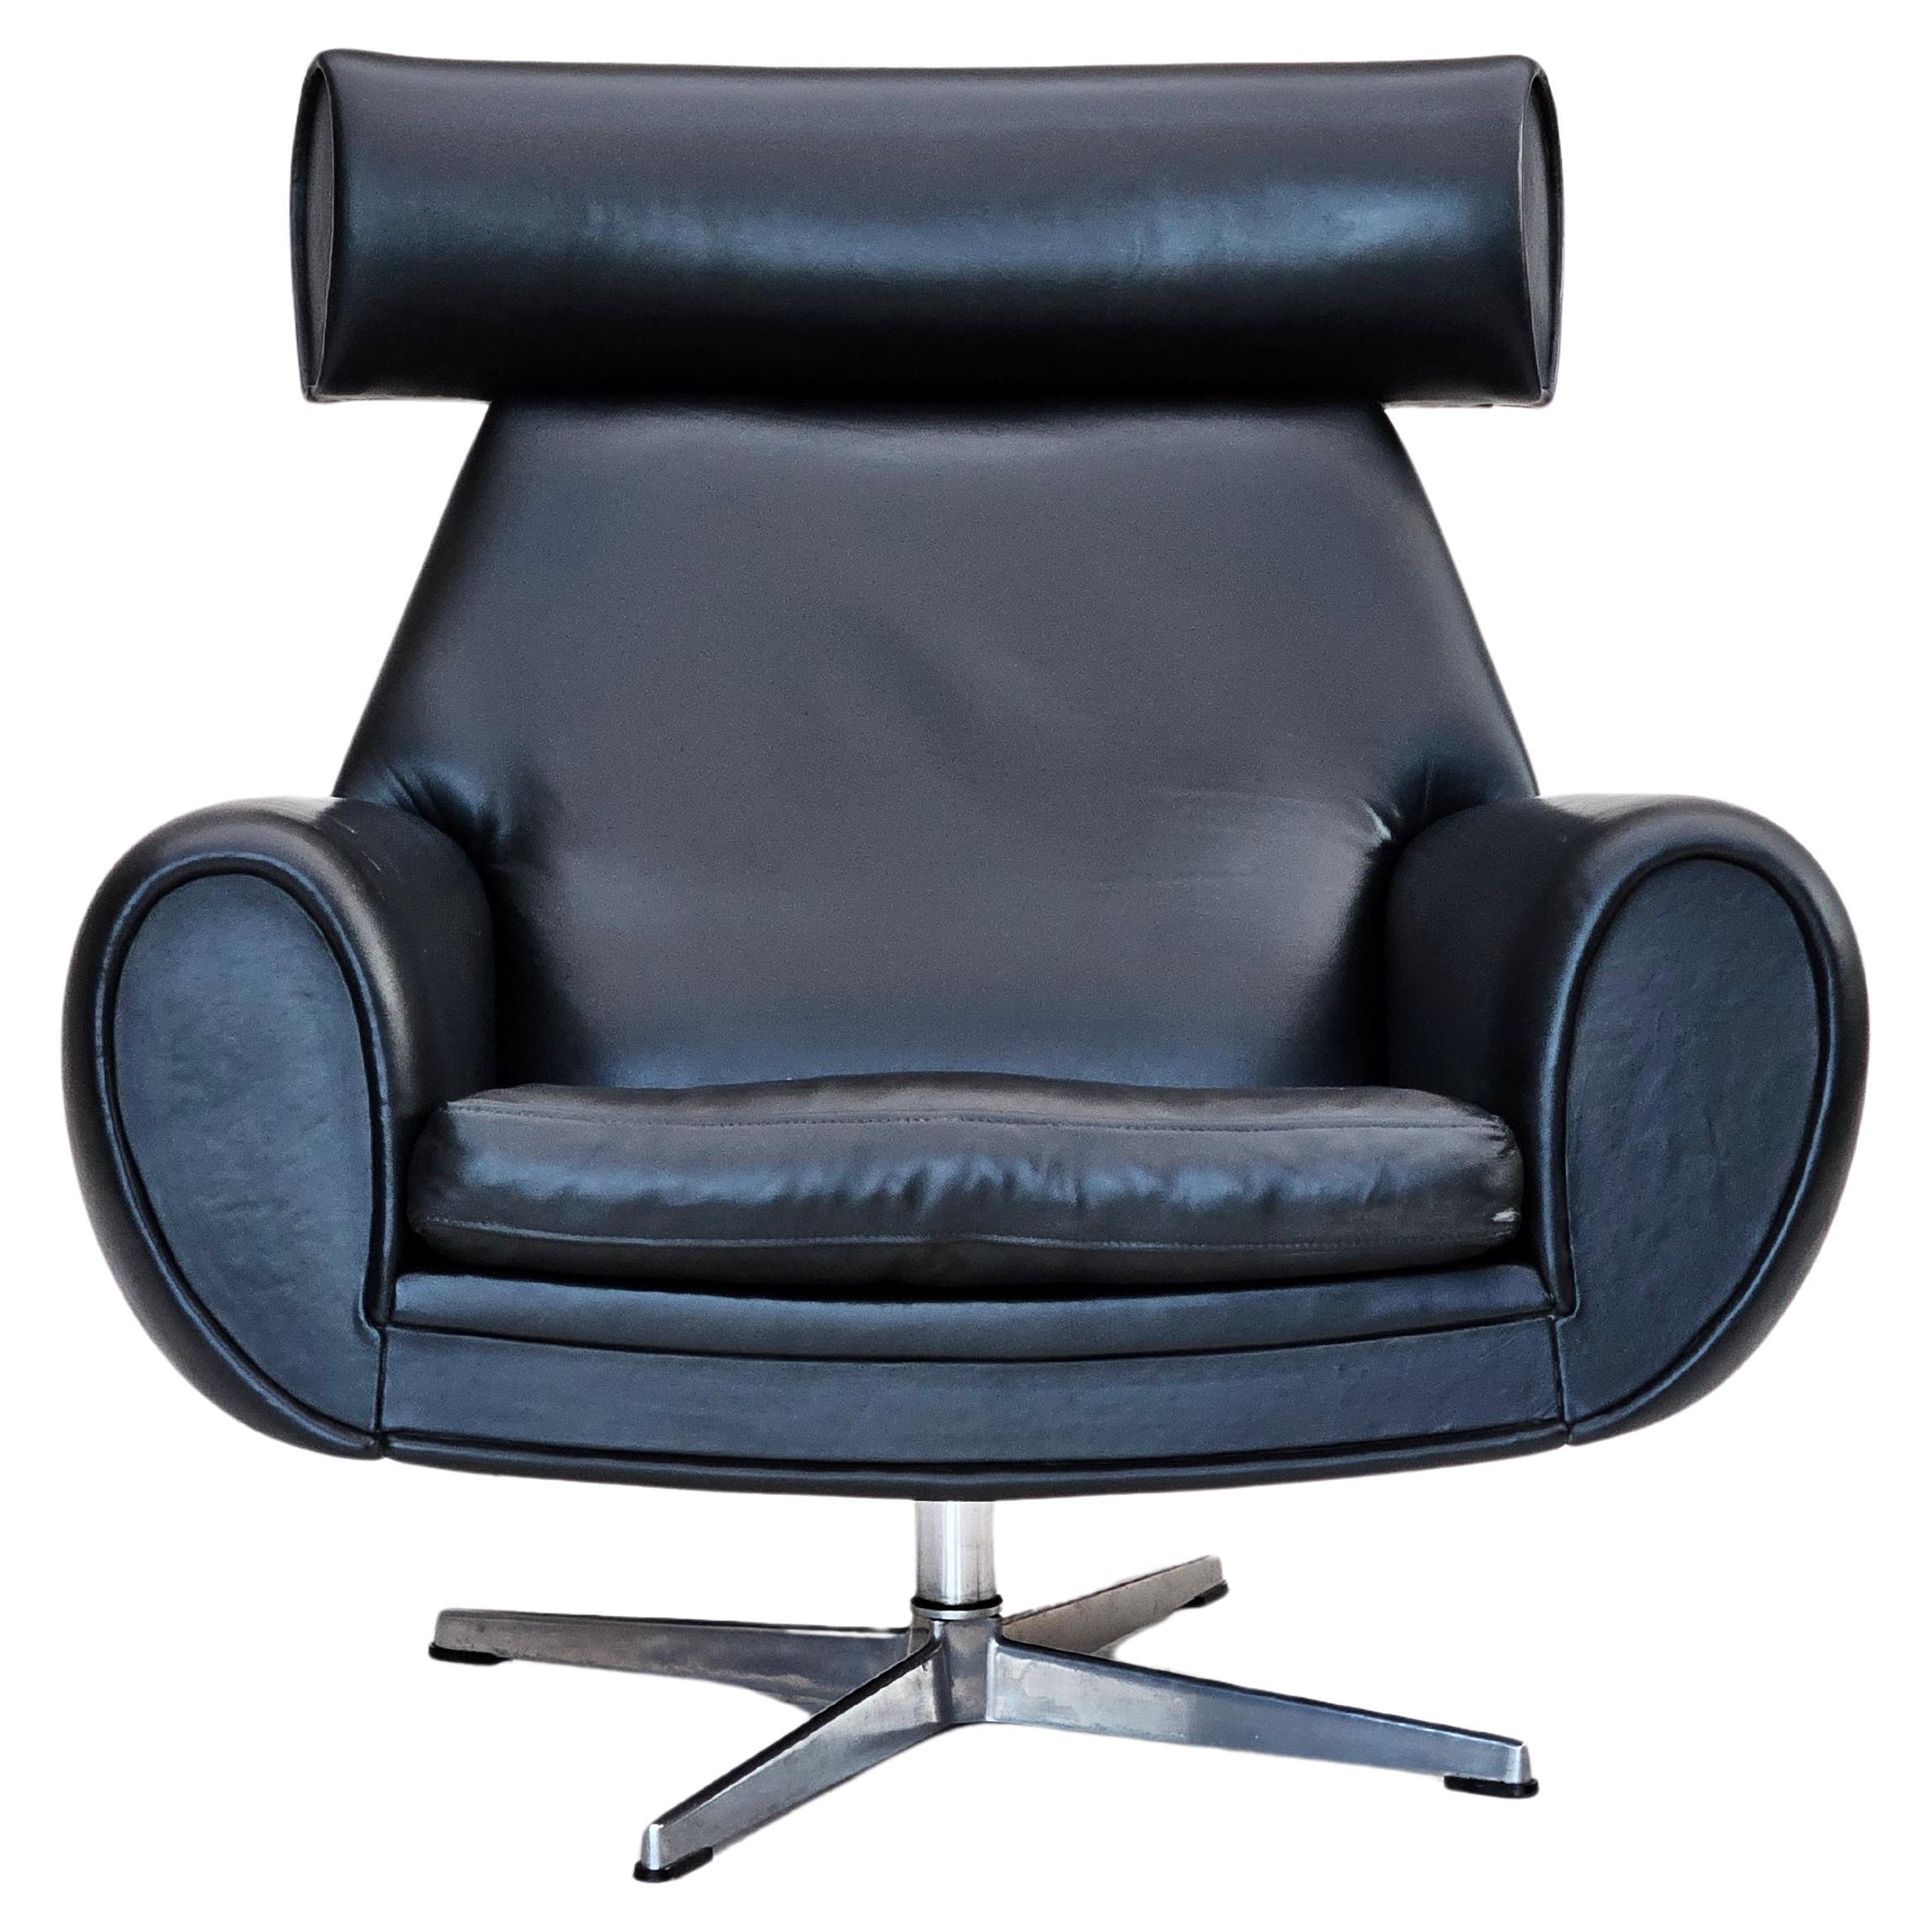 1960s, Danish swivel chair, original condition, leather, cast aluminium. For Sale